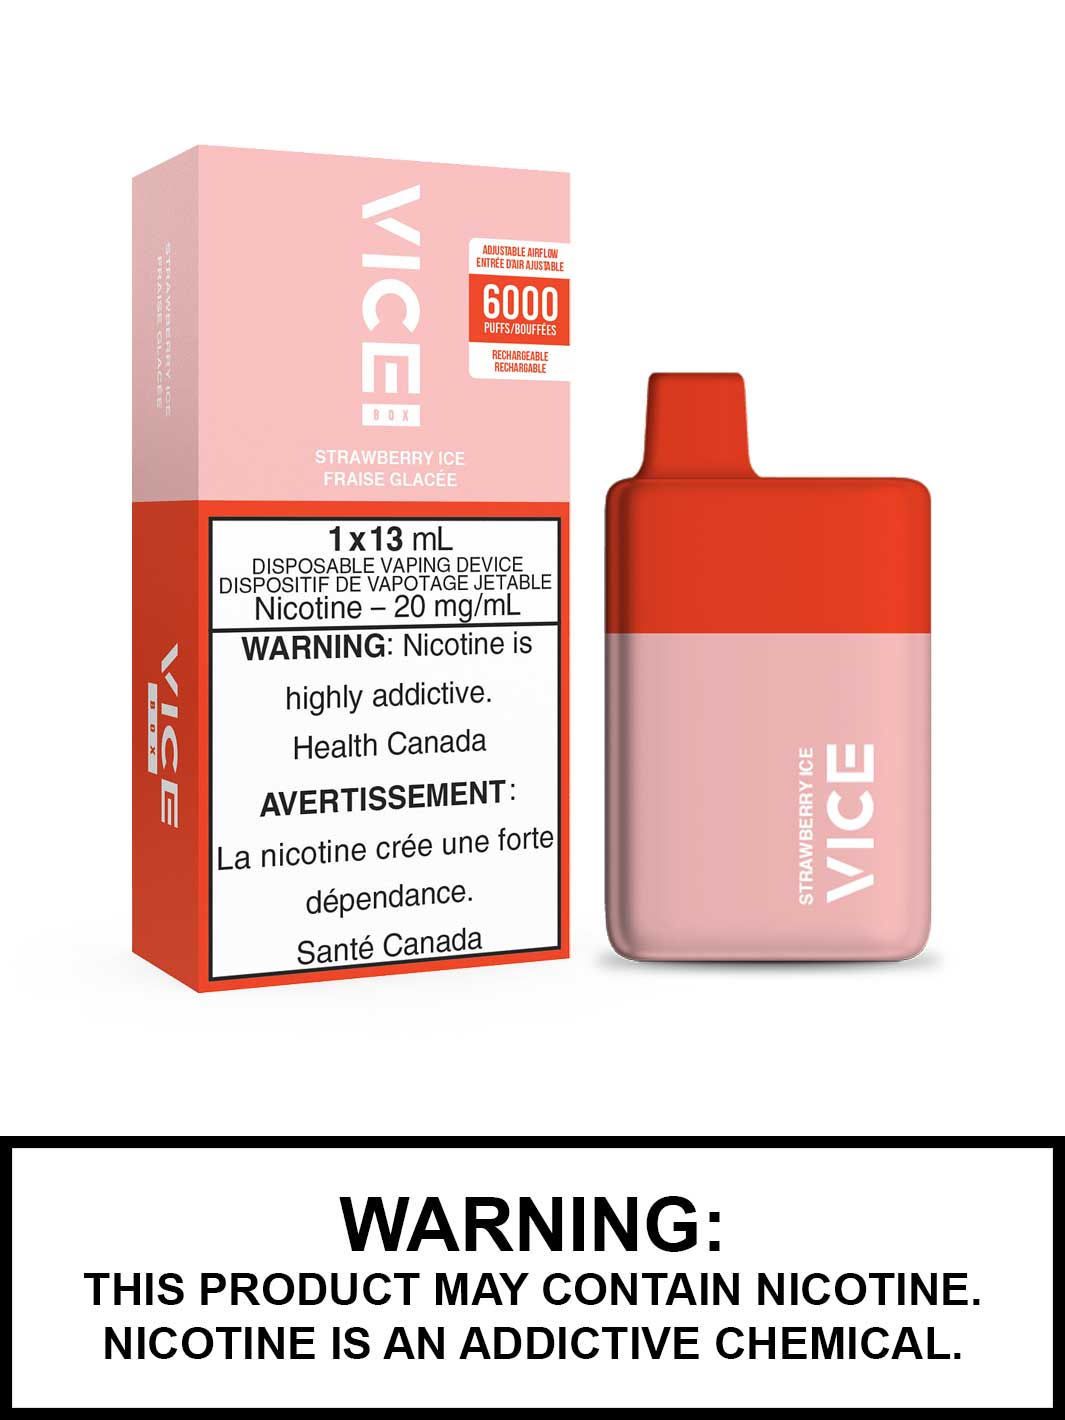 Vice Vape Strawberry Ice Vice Box Disposable Vape Canada, Vape360